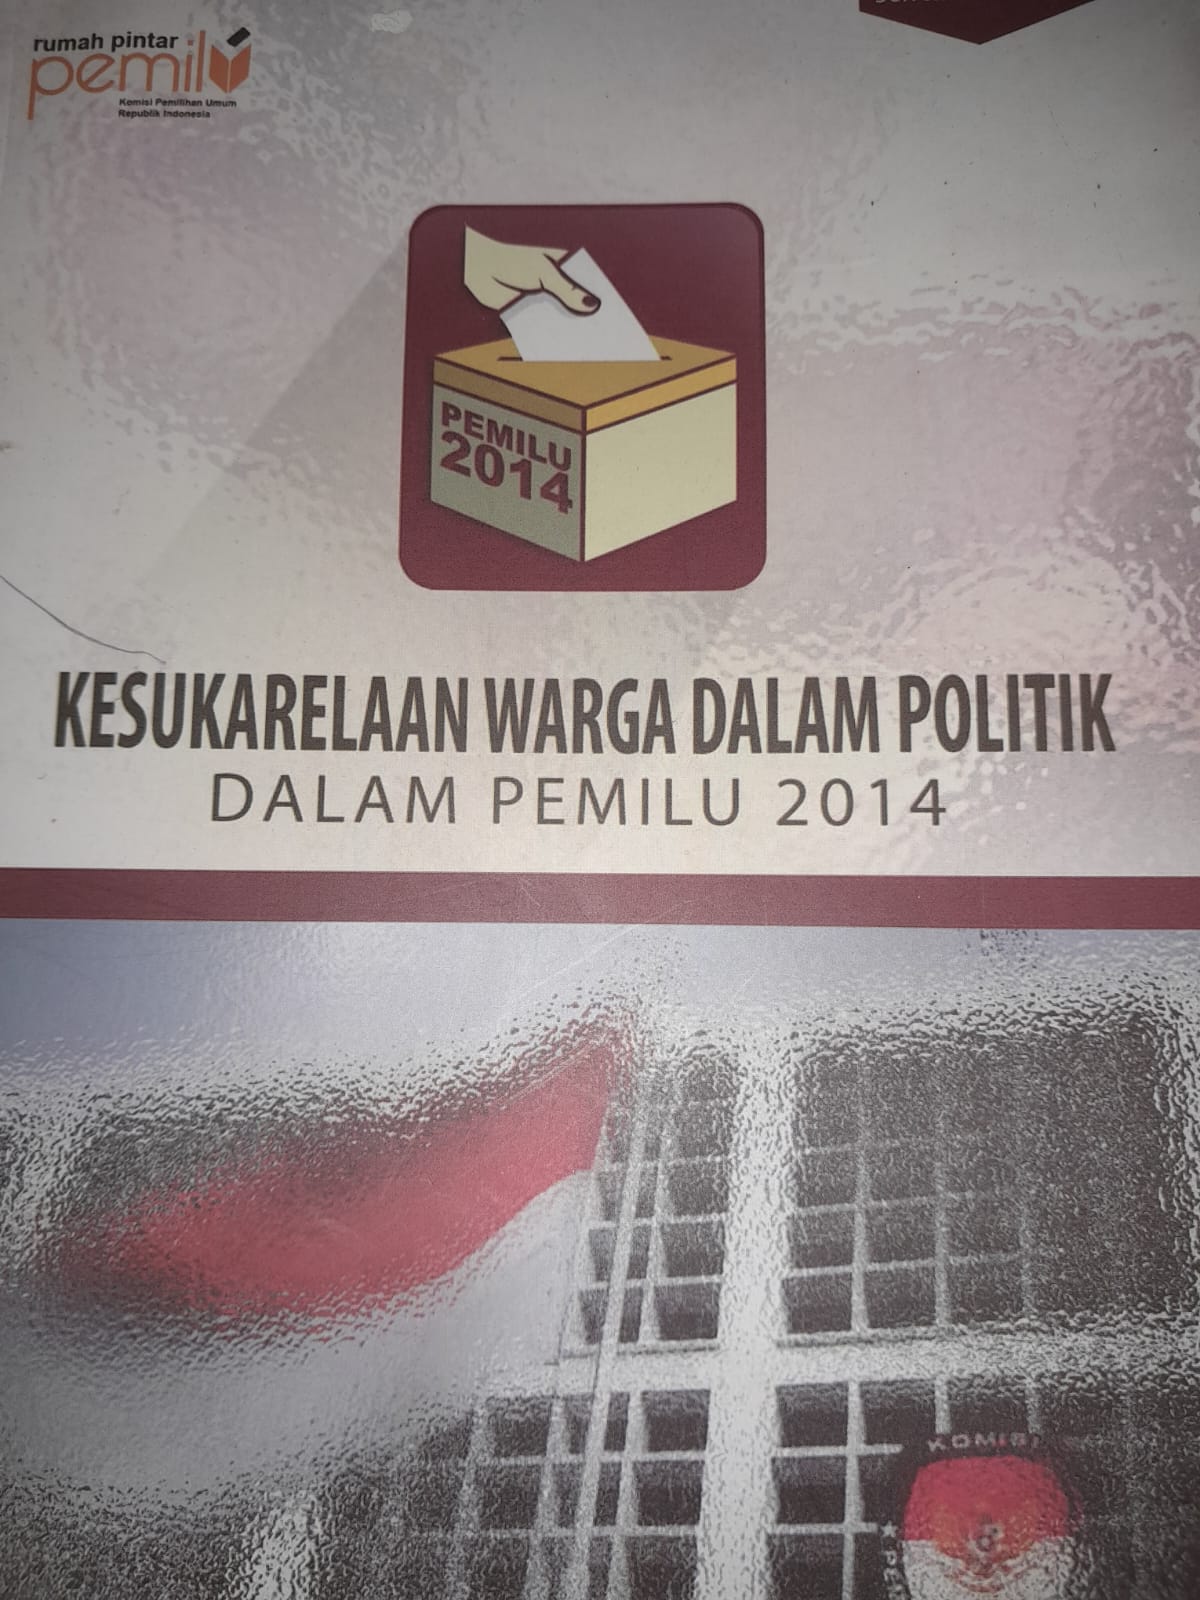 KESUKARELAAN WARGA DALAM POLITIK DALAM PEMILU 2014